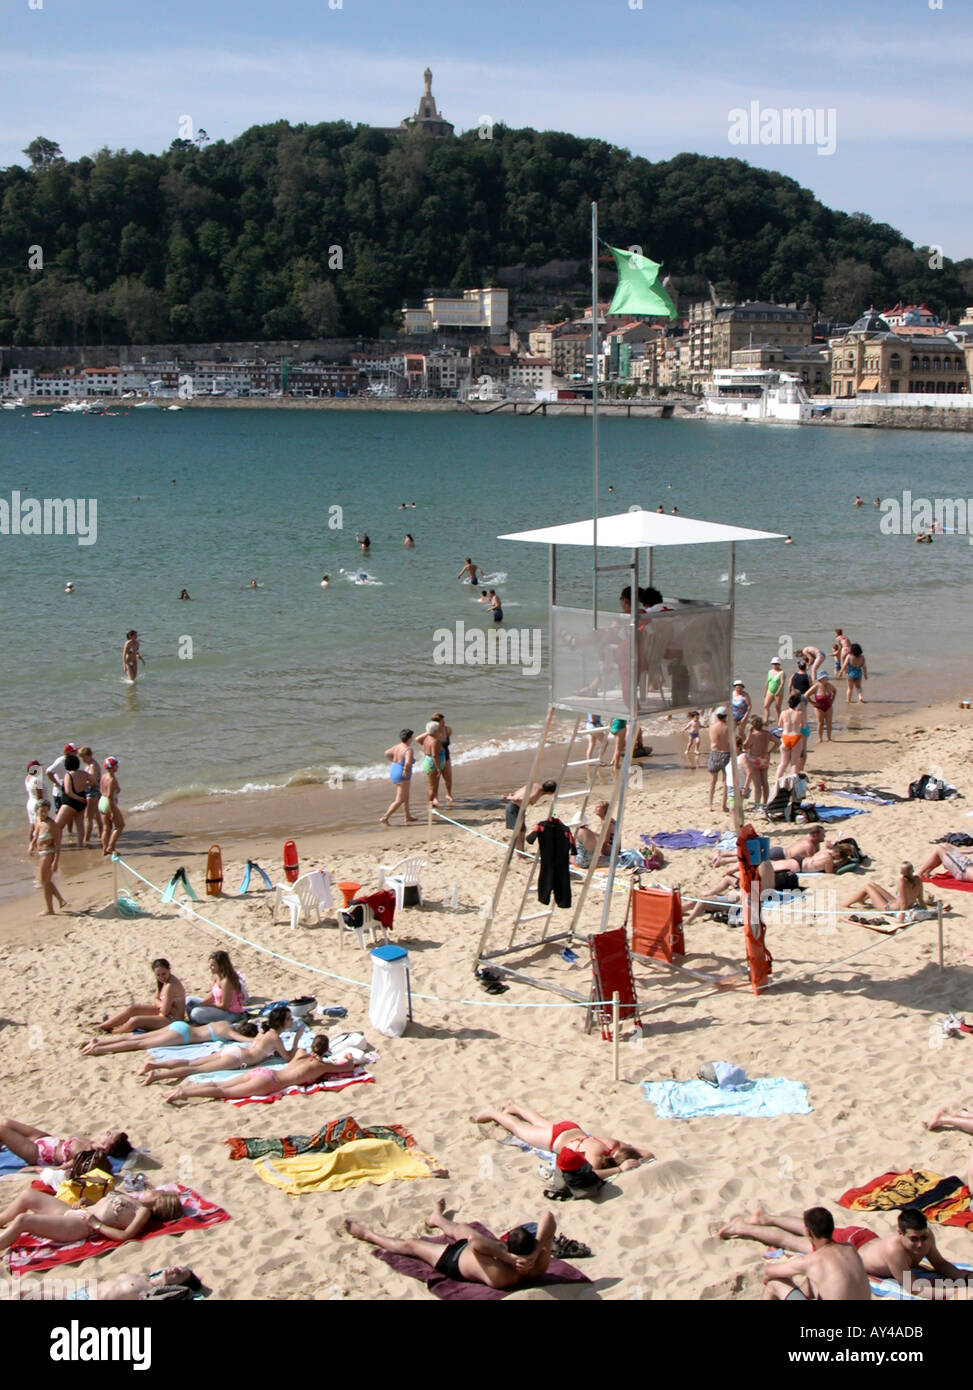 Lifeguards and bathers Playa de la Concha San Sebastian Basque region of Spain Stock Photo